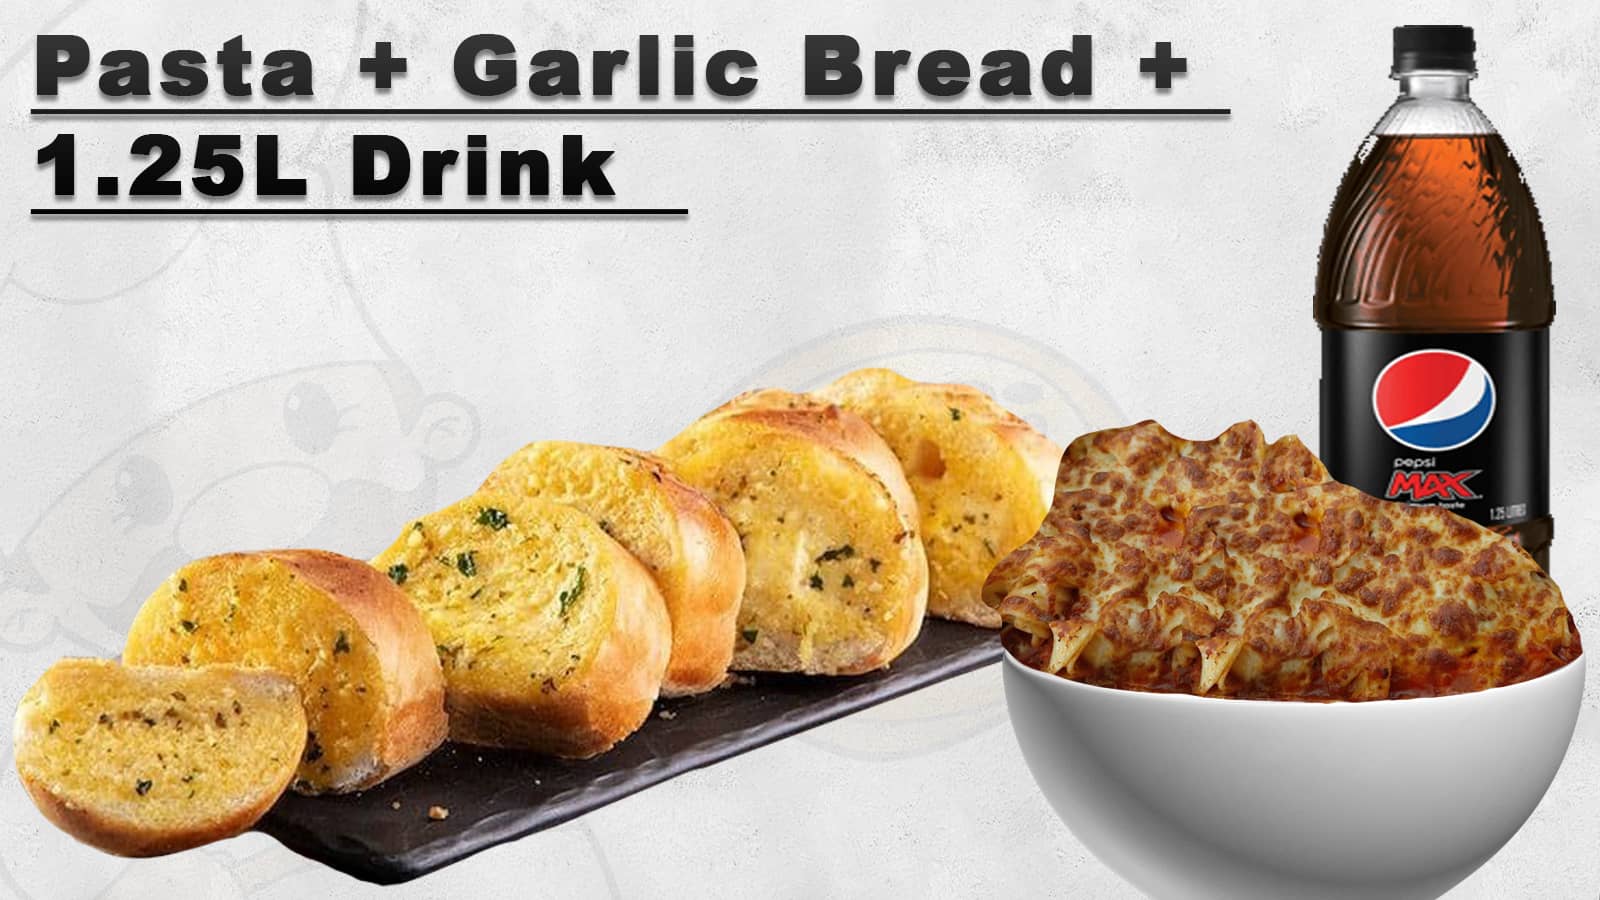 Pasta + Garlic Bread + 1.25 Drink